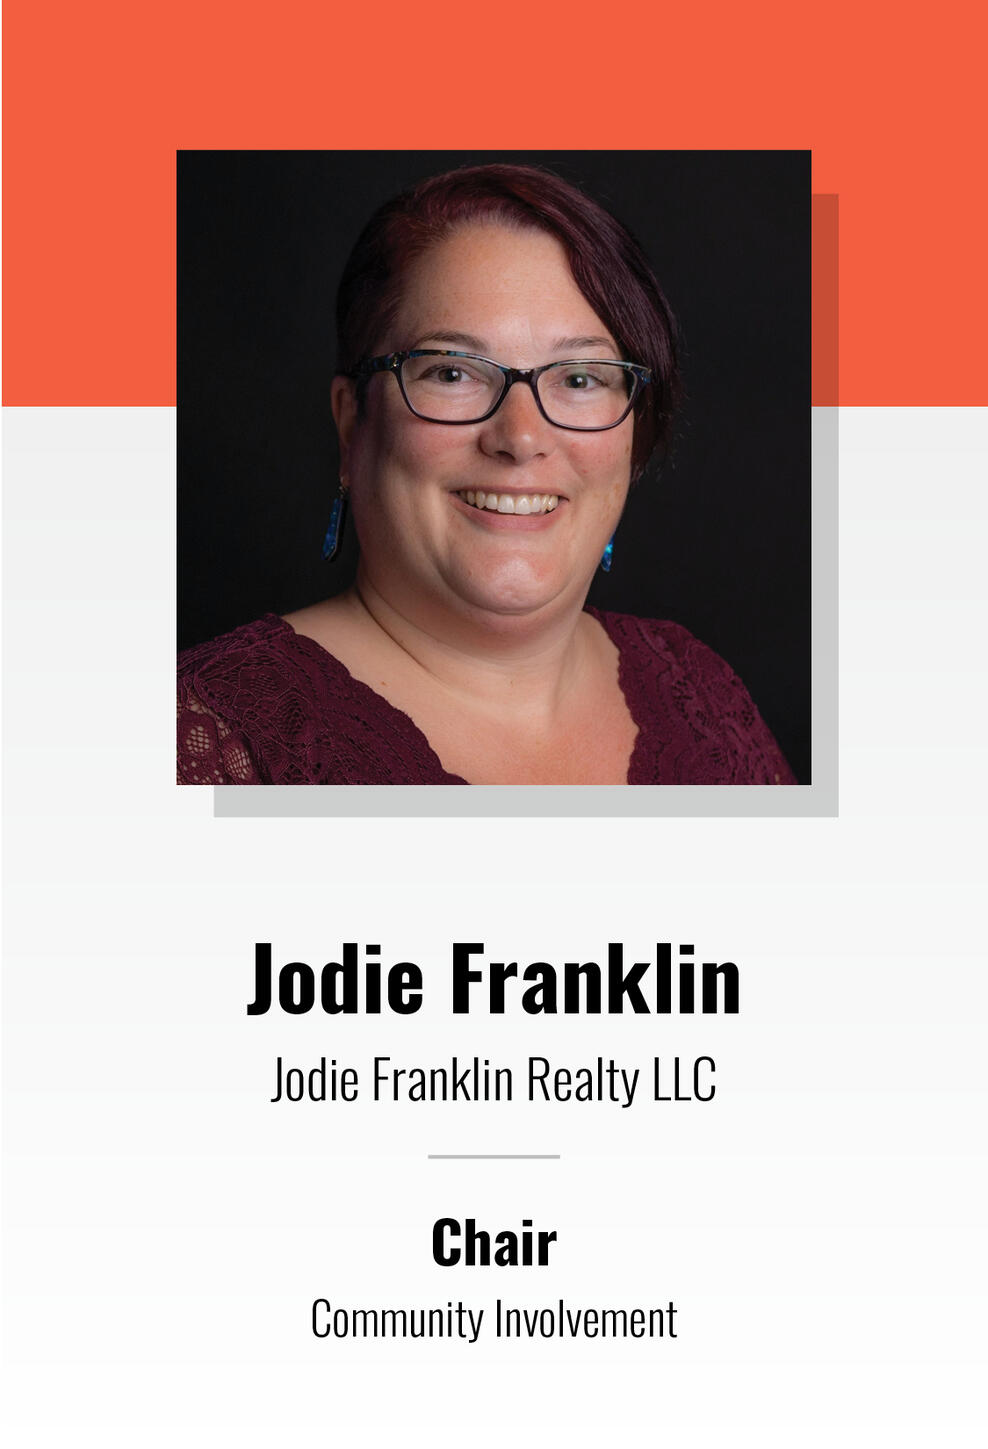 Jodie Franklin